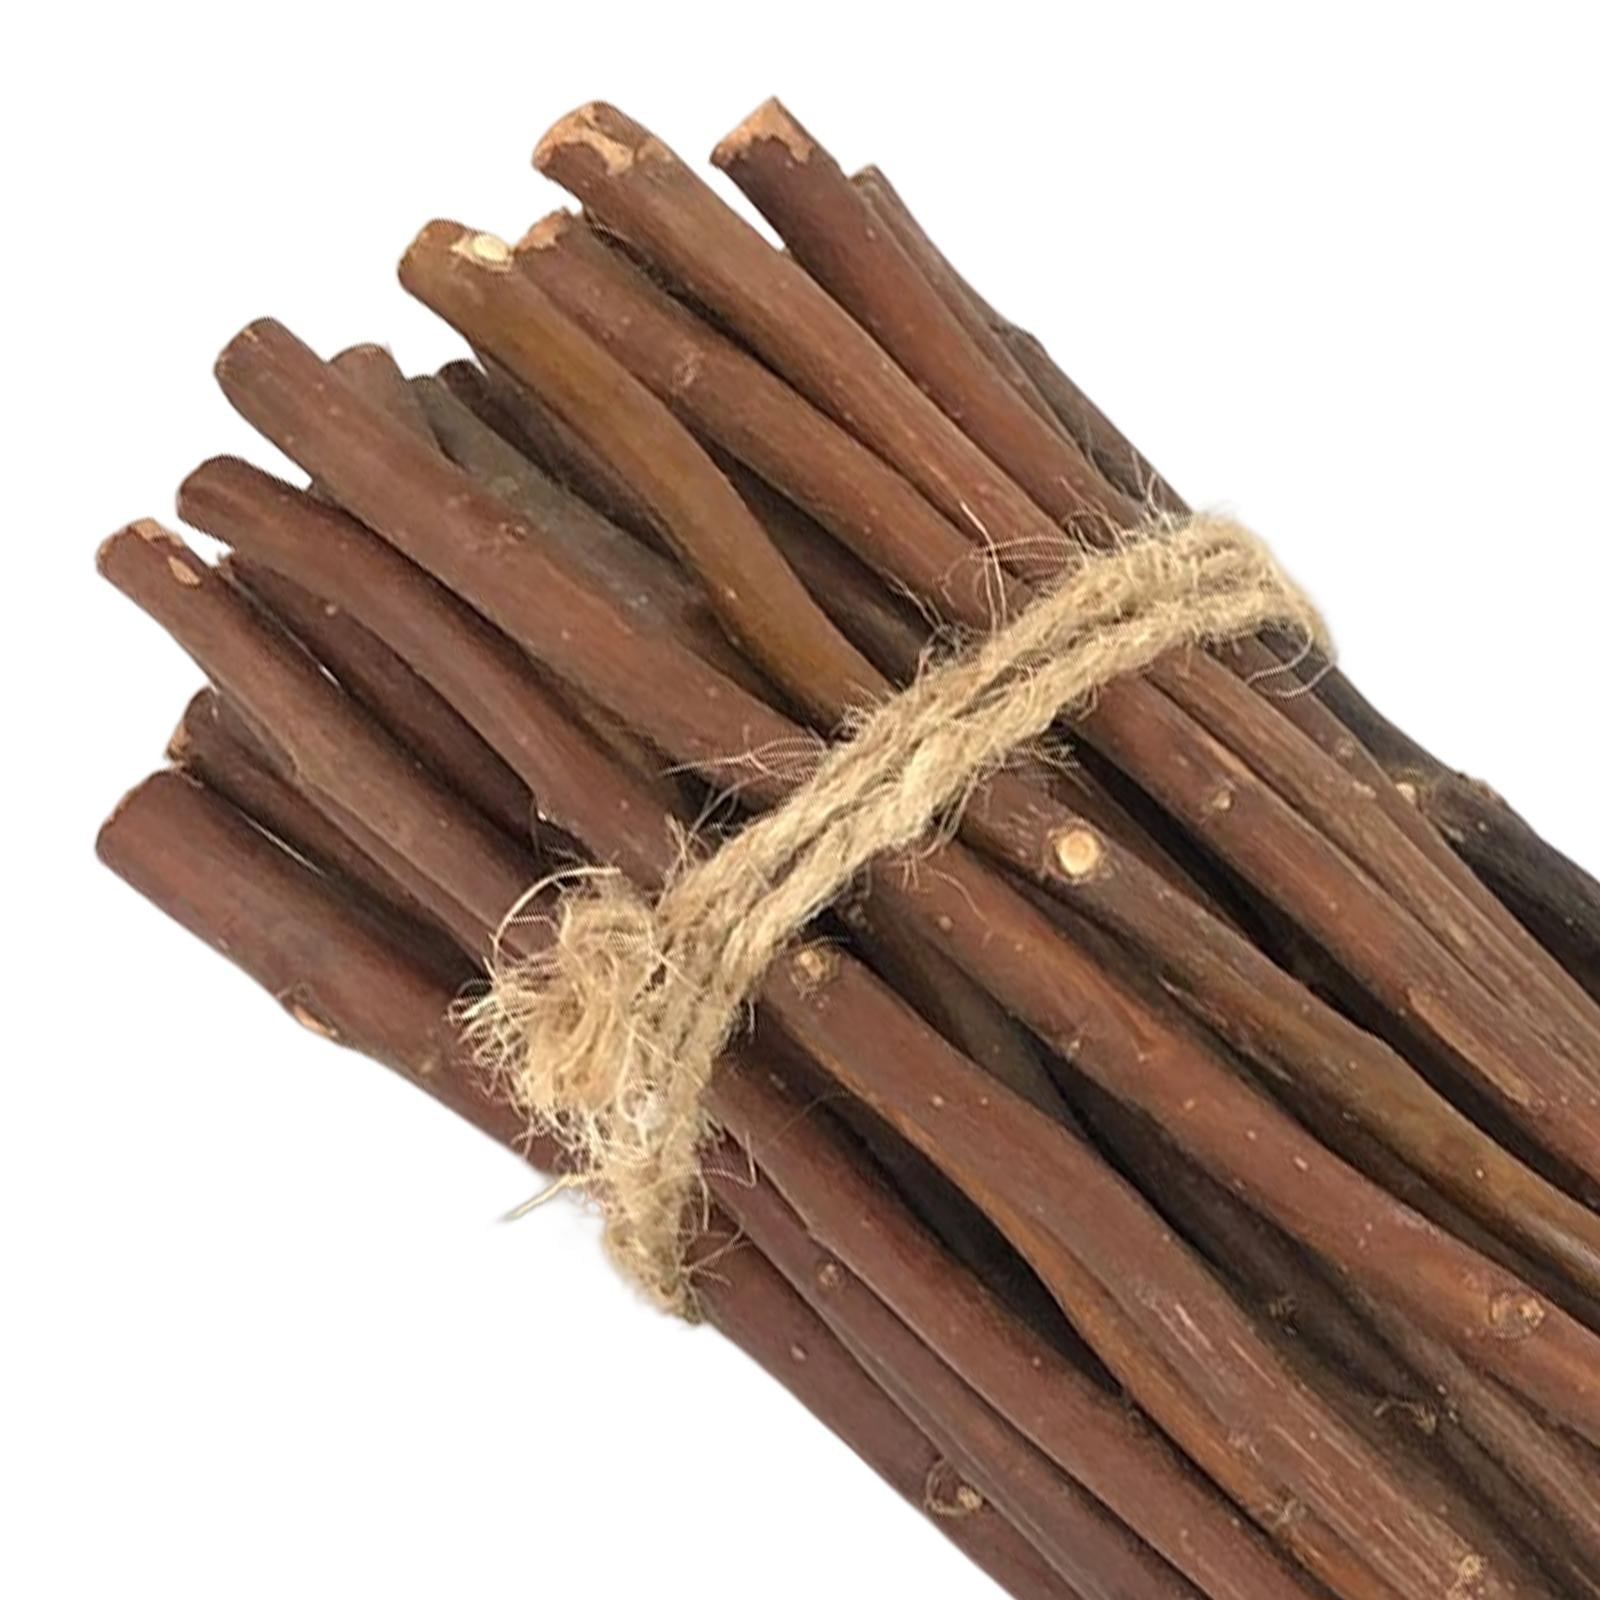 50x Wood Log Sticks For Diy Crafts Photo Props Craft Sticks, Wood Crafts  Sticks, Wood Sticks, Wood Craft Sticks, Photo Stick, Wood Logs, Living  Space